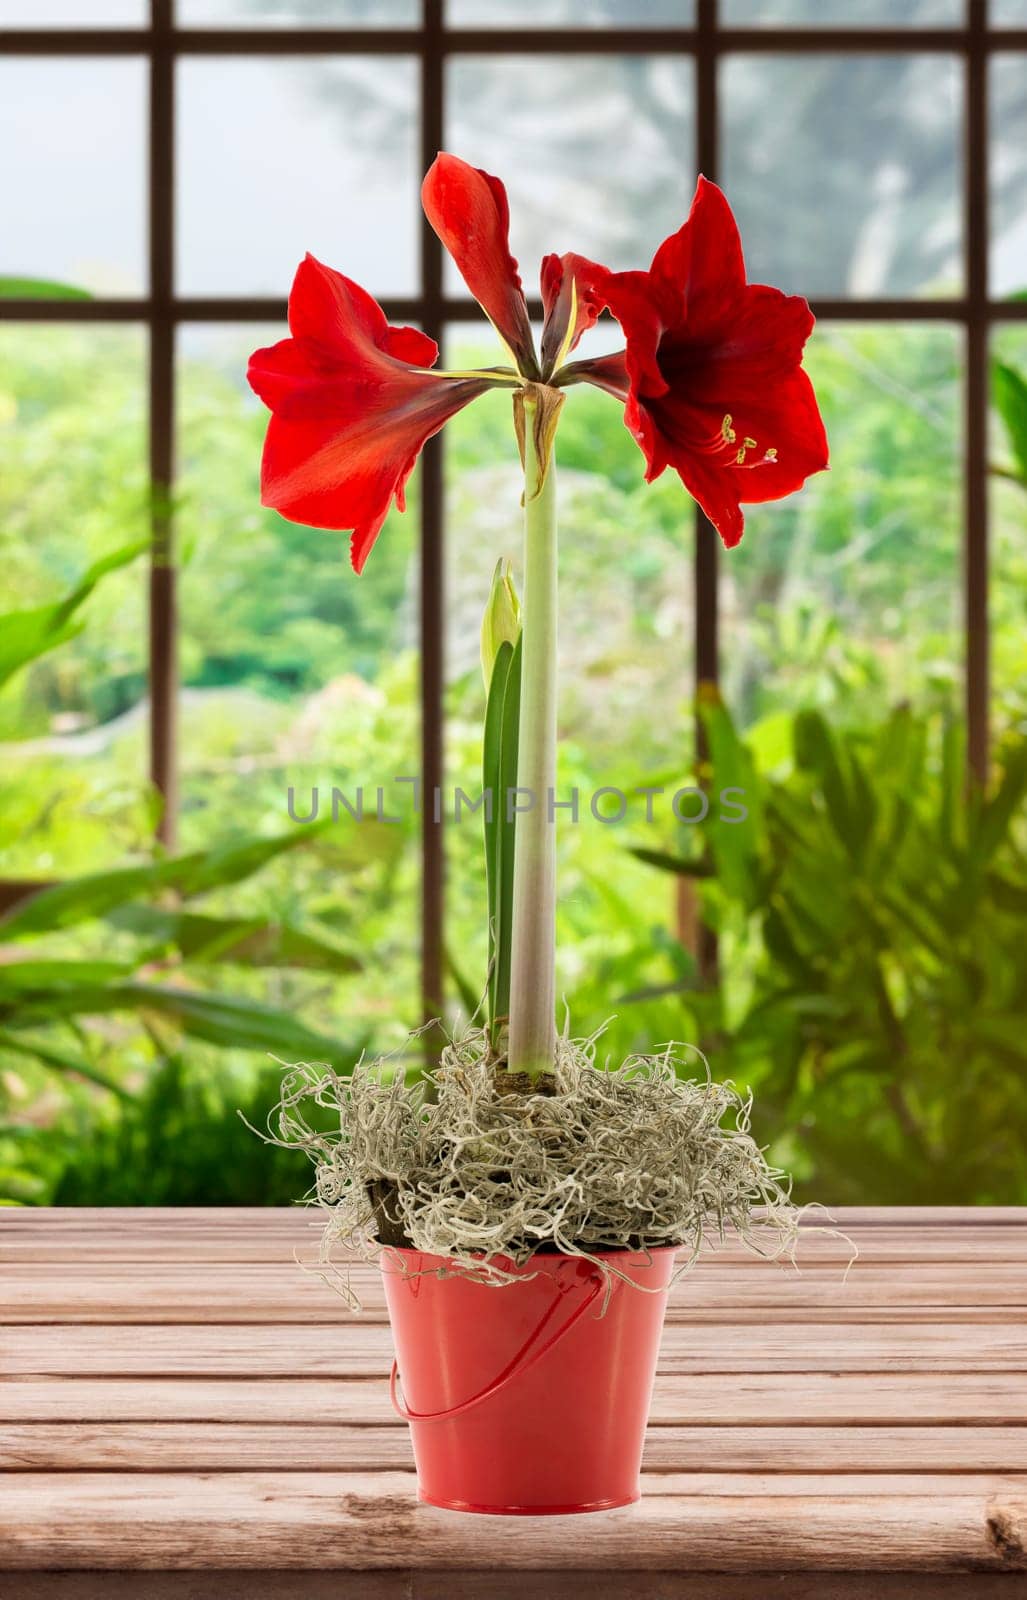 red amaryllis flower with garden view background